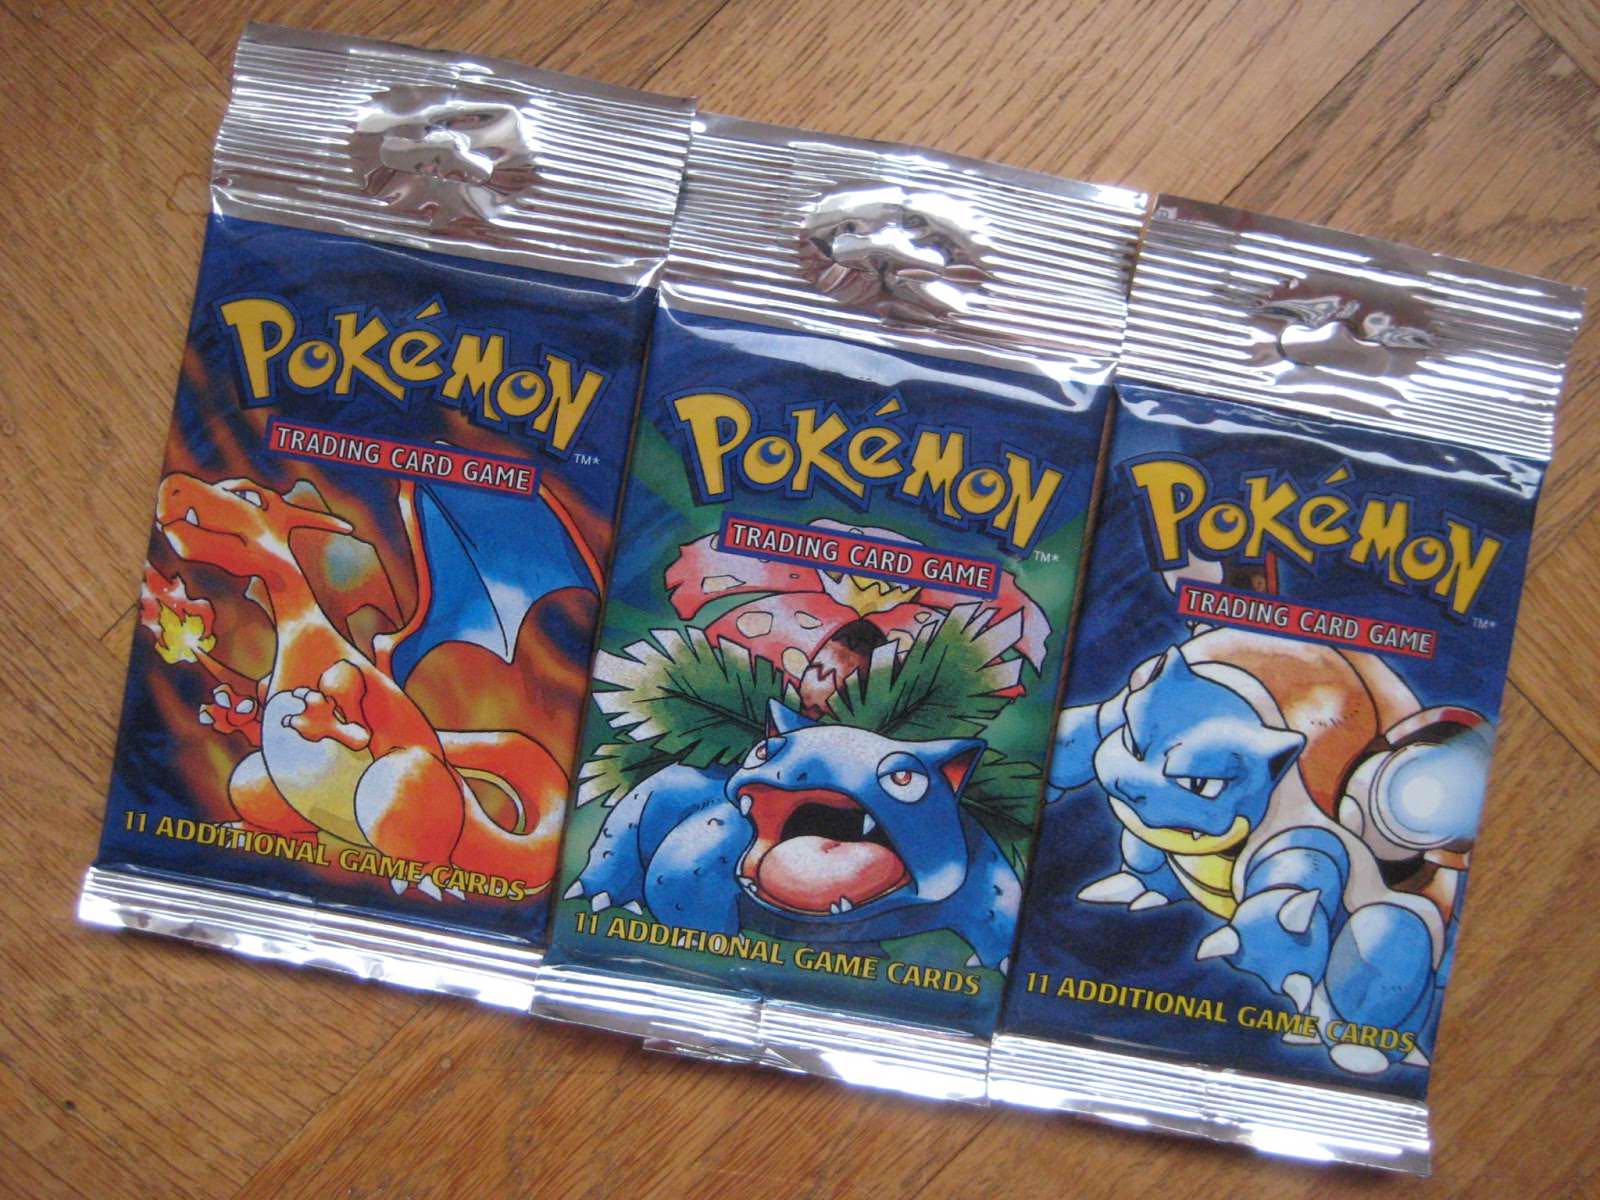 funny gaming memes - pokemon base set booster - Pokemon Pokmon Pokemon Trading Card Game Trading Card Game Trading Card Game 11 Additional Game Cards 11 Additional Game Cards 11 Additional Game Cards